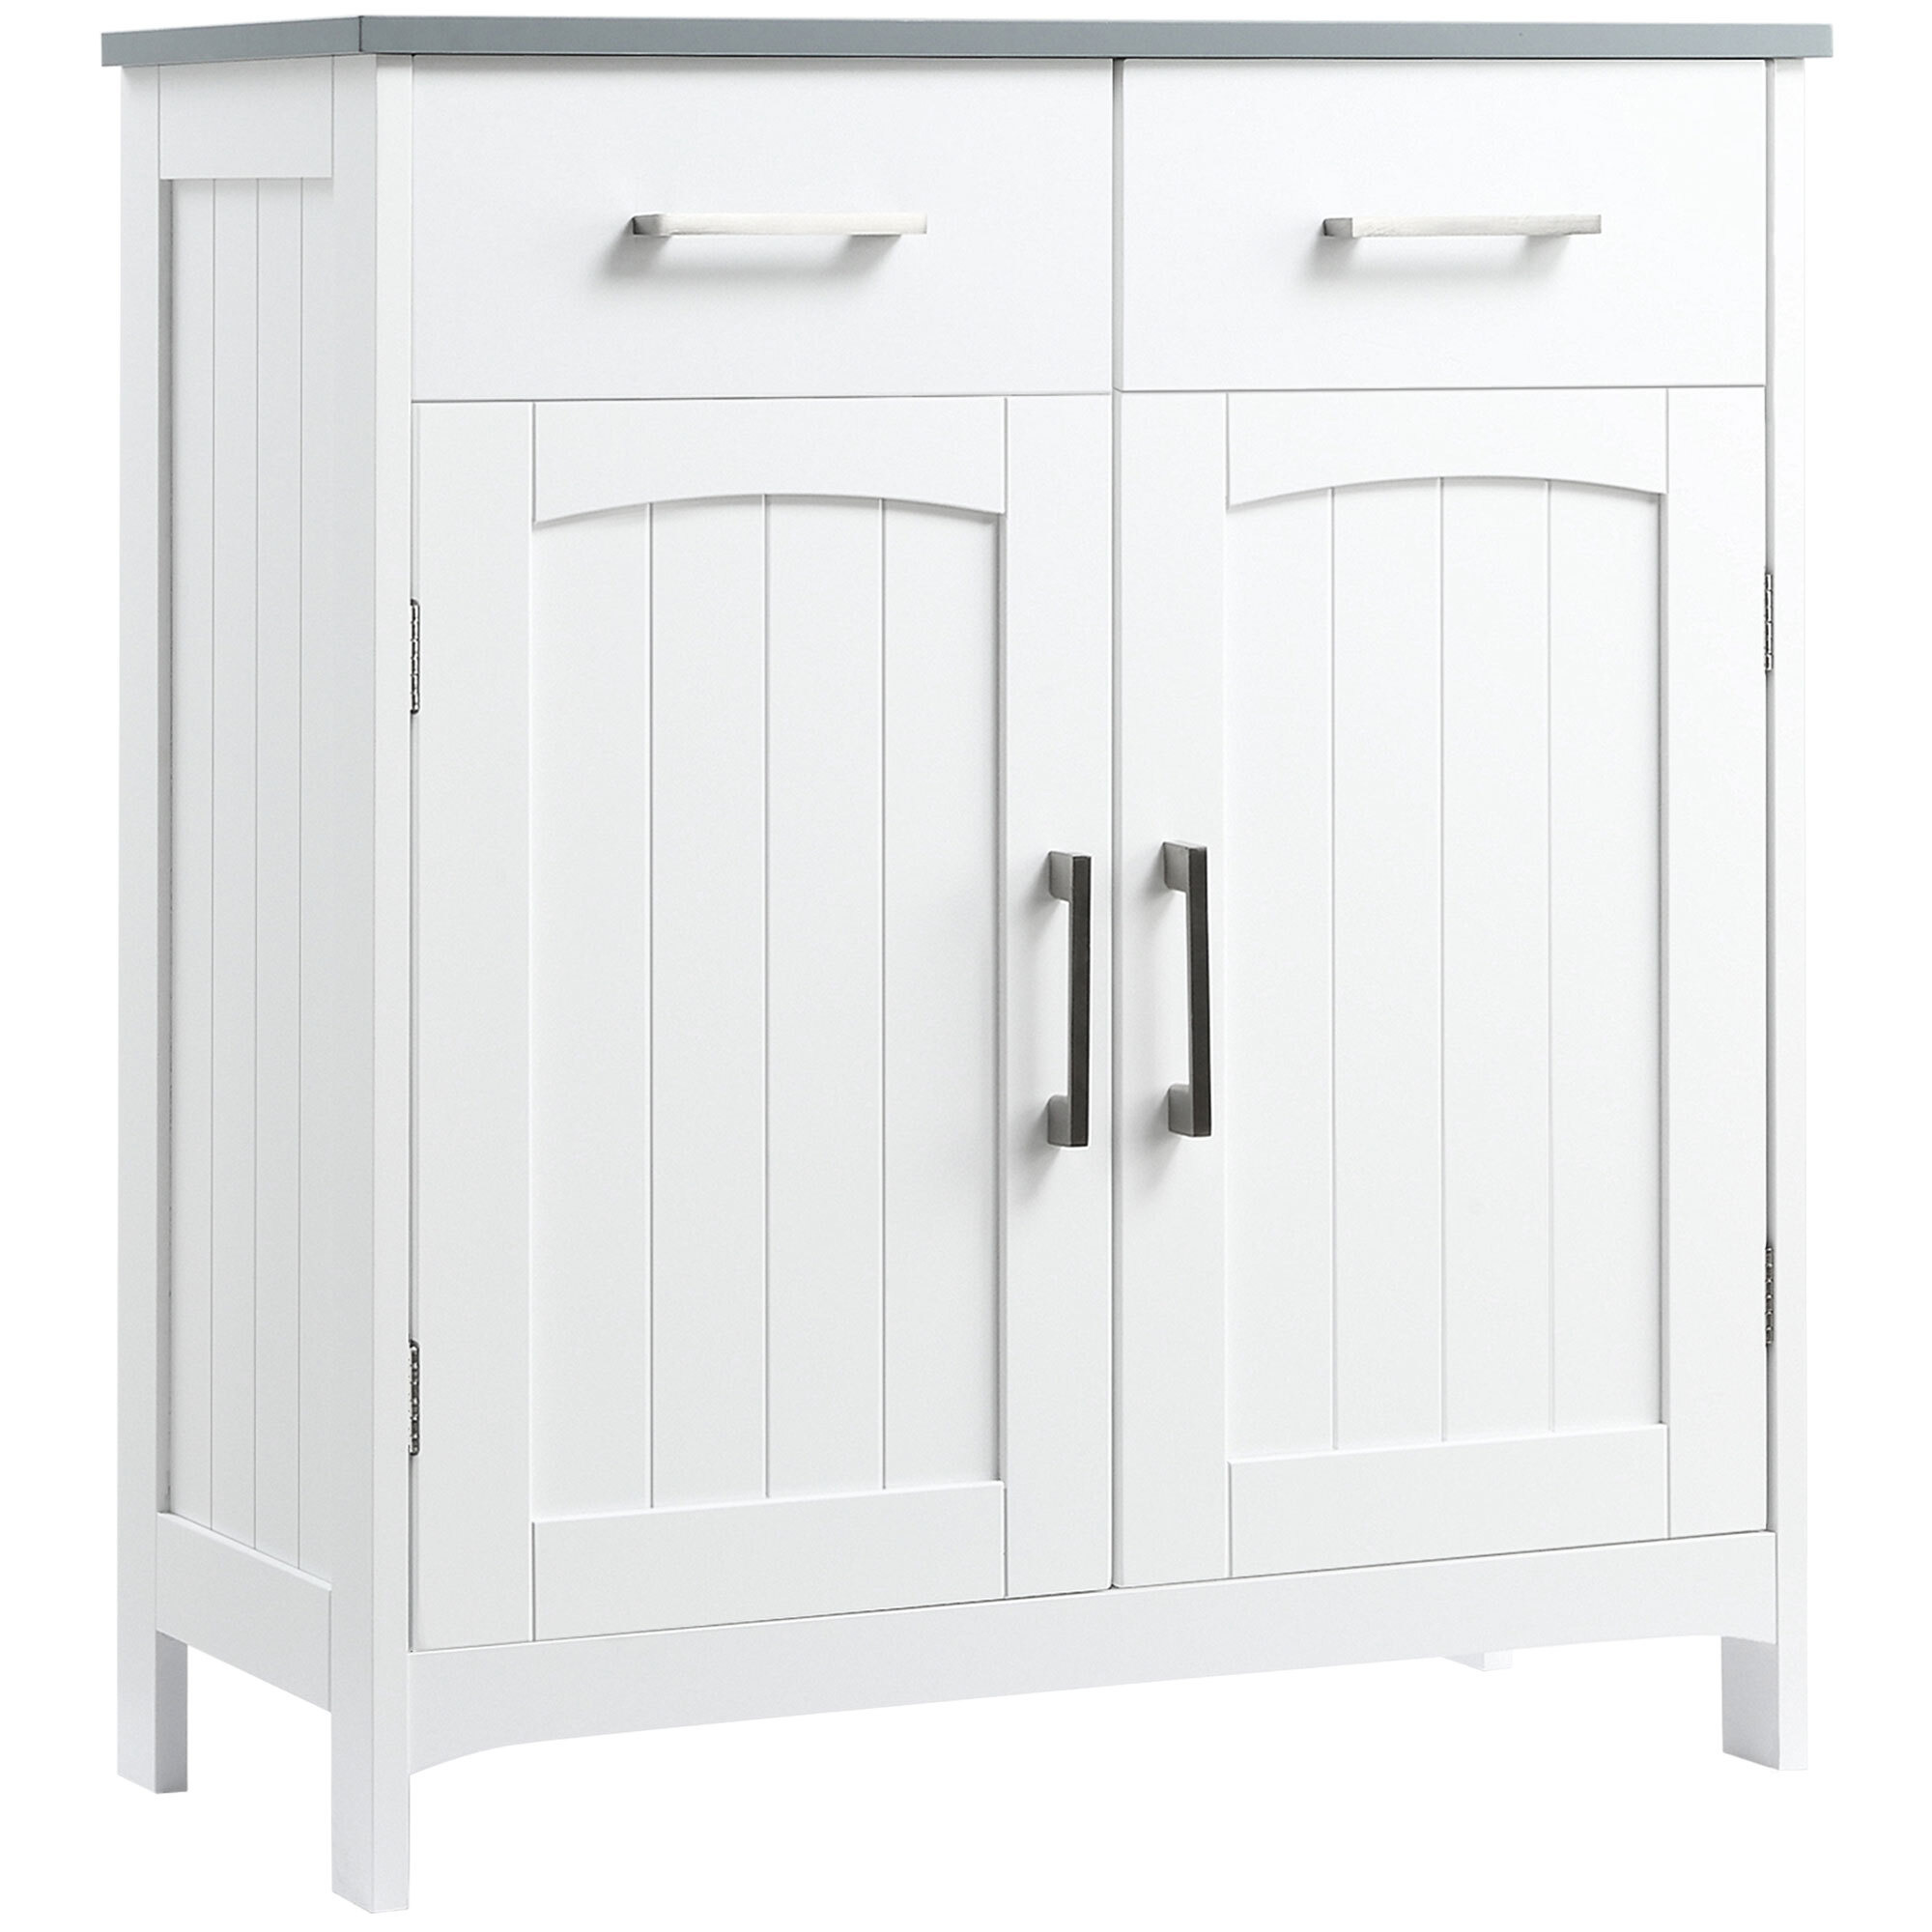 kleankin Freestanding Bathroom Cabinet, Storage Cupboard with 2 Drawers, Double Doors, Adjustable Shelf, White